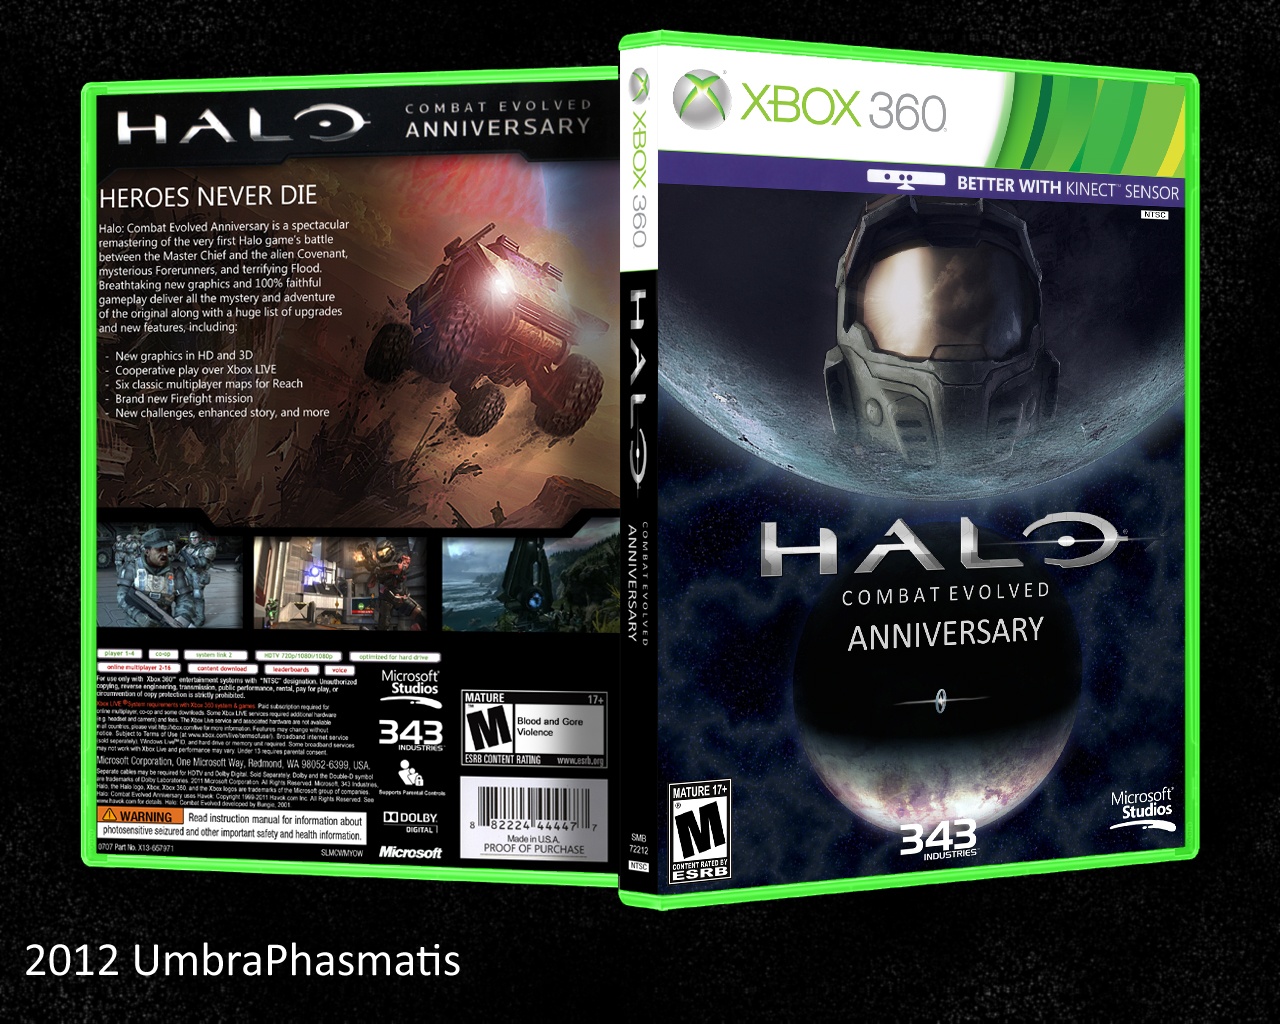 Halo: Combat Evolved Anniversary box cover